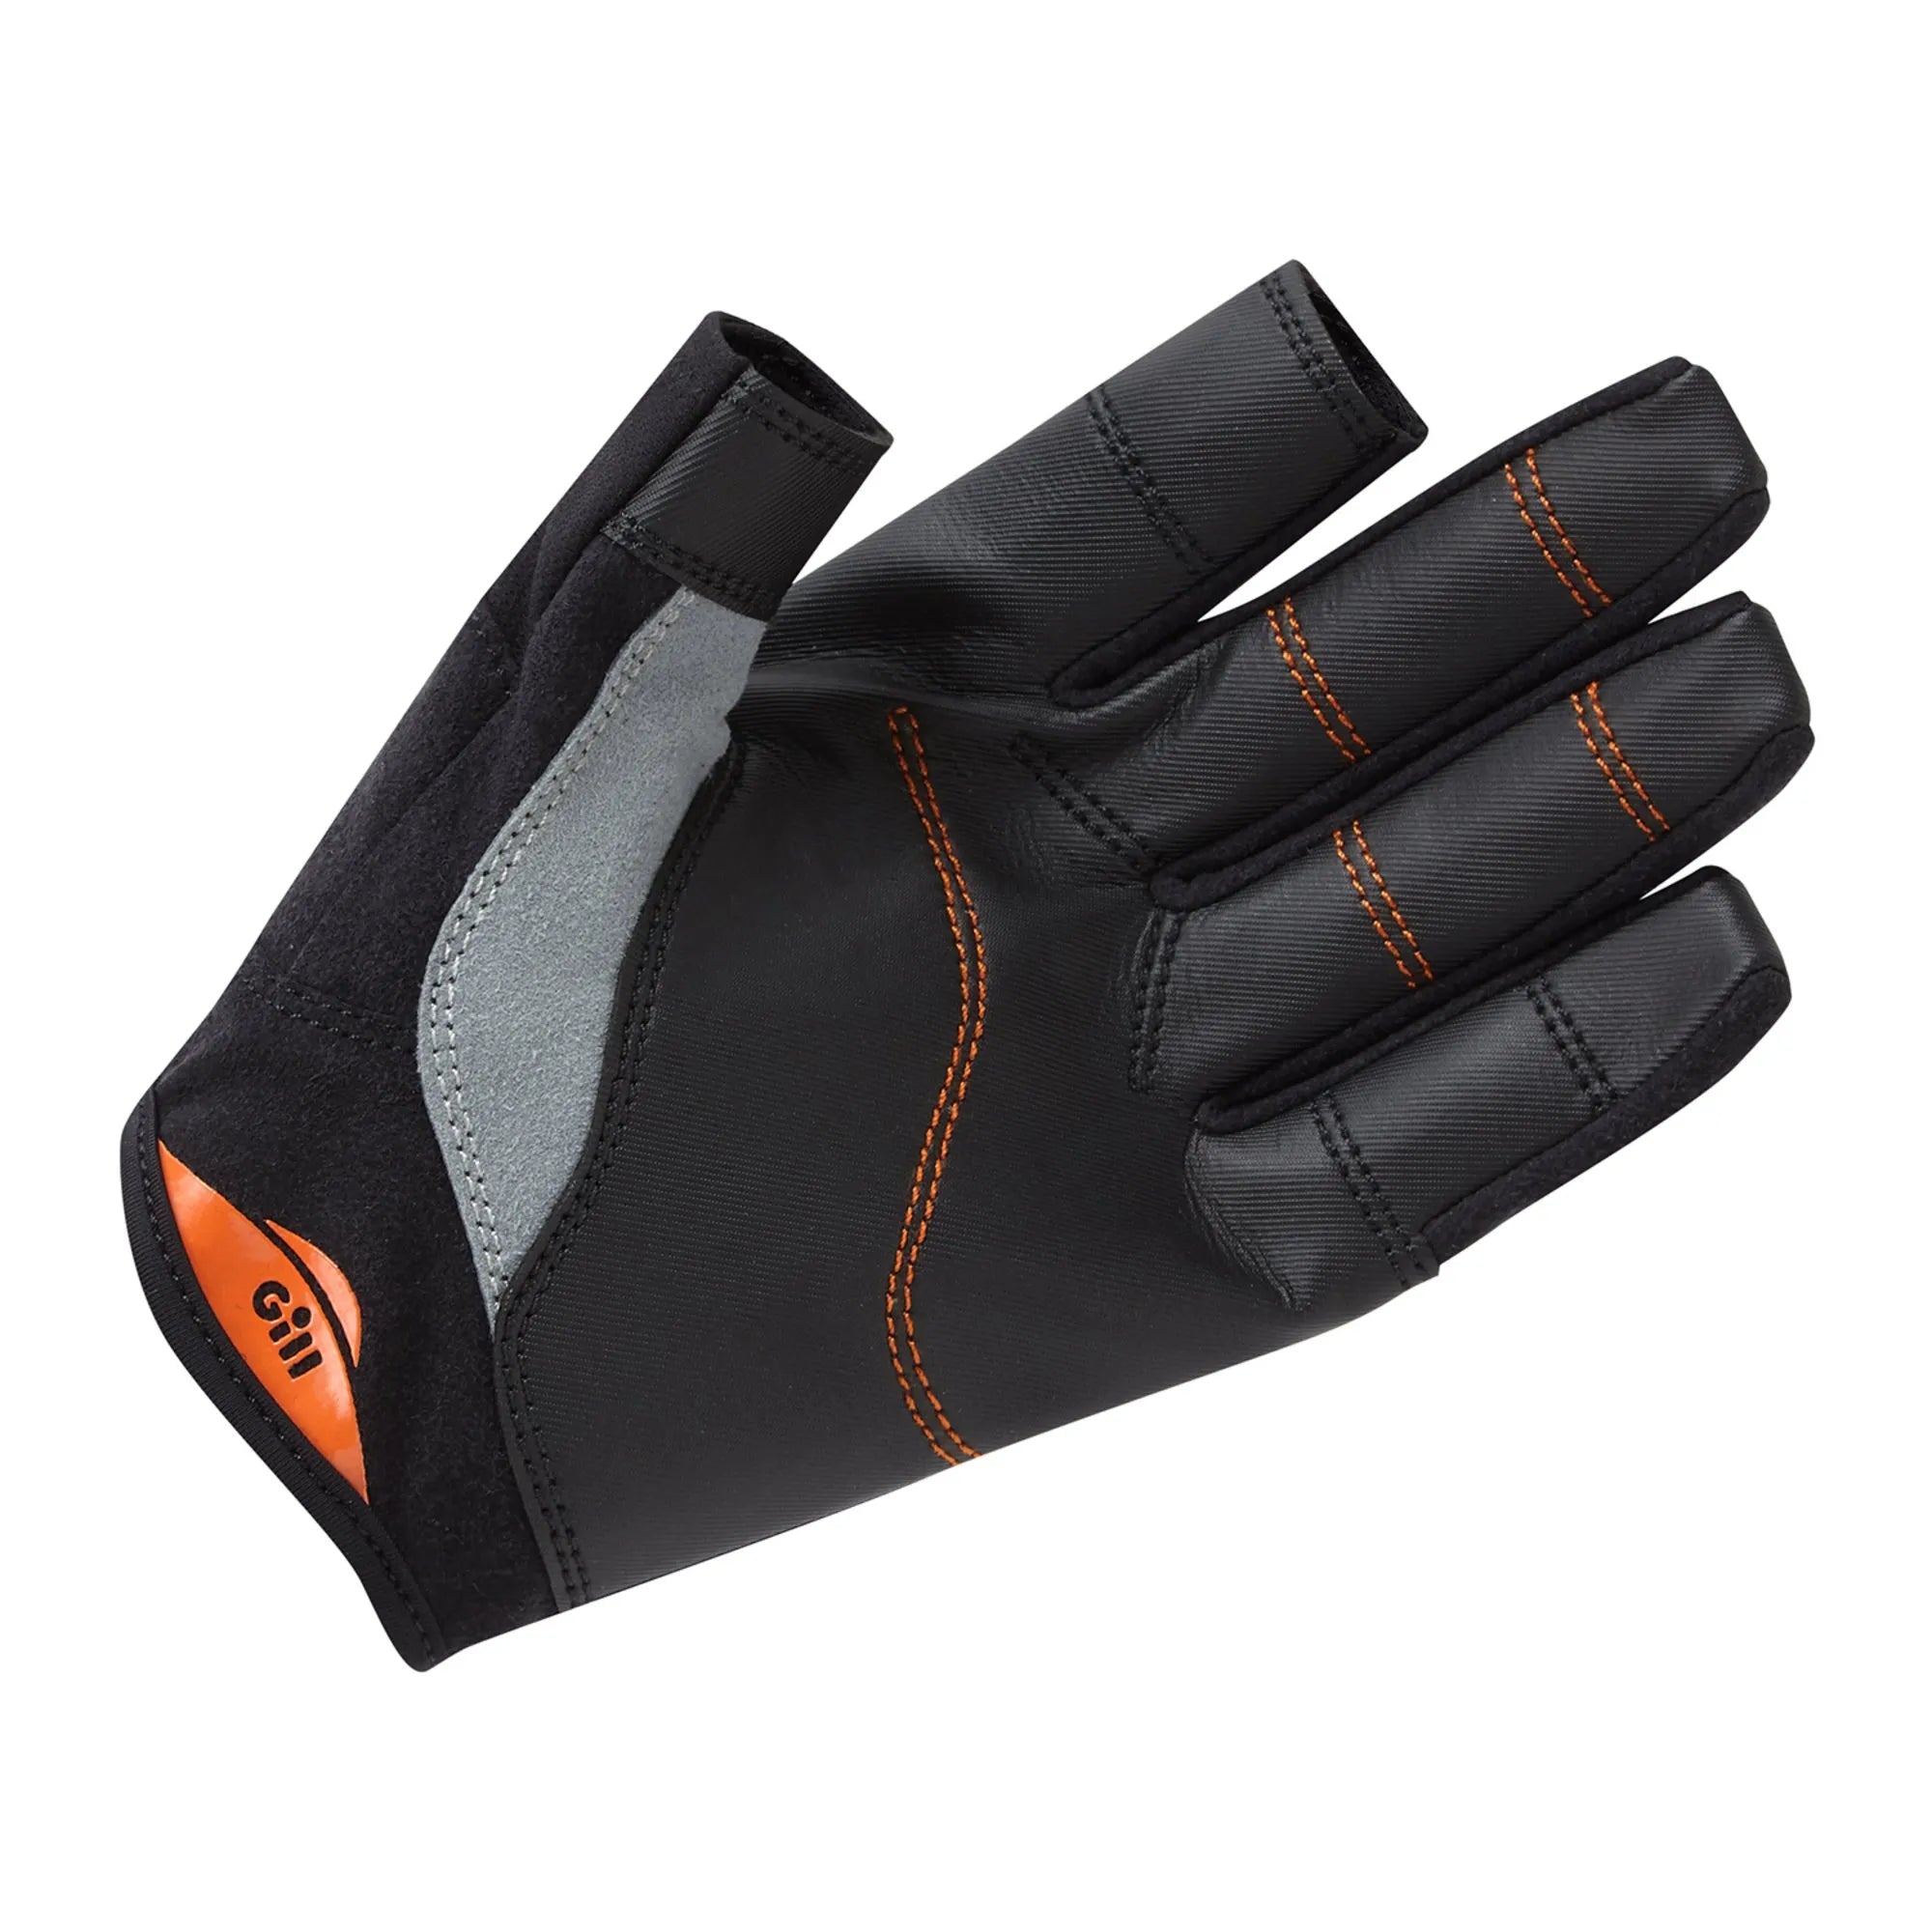 Championship Gloves (Long Finger) - Black